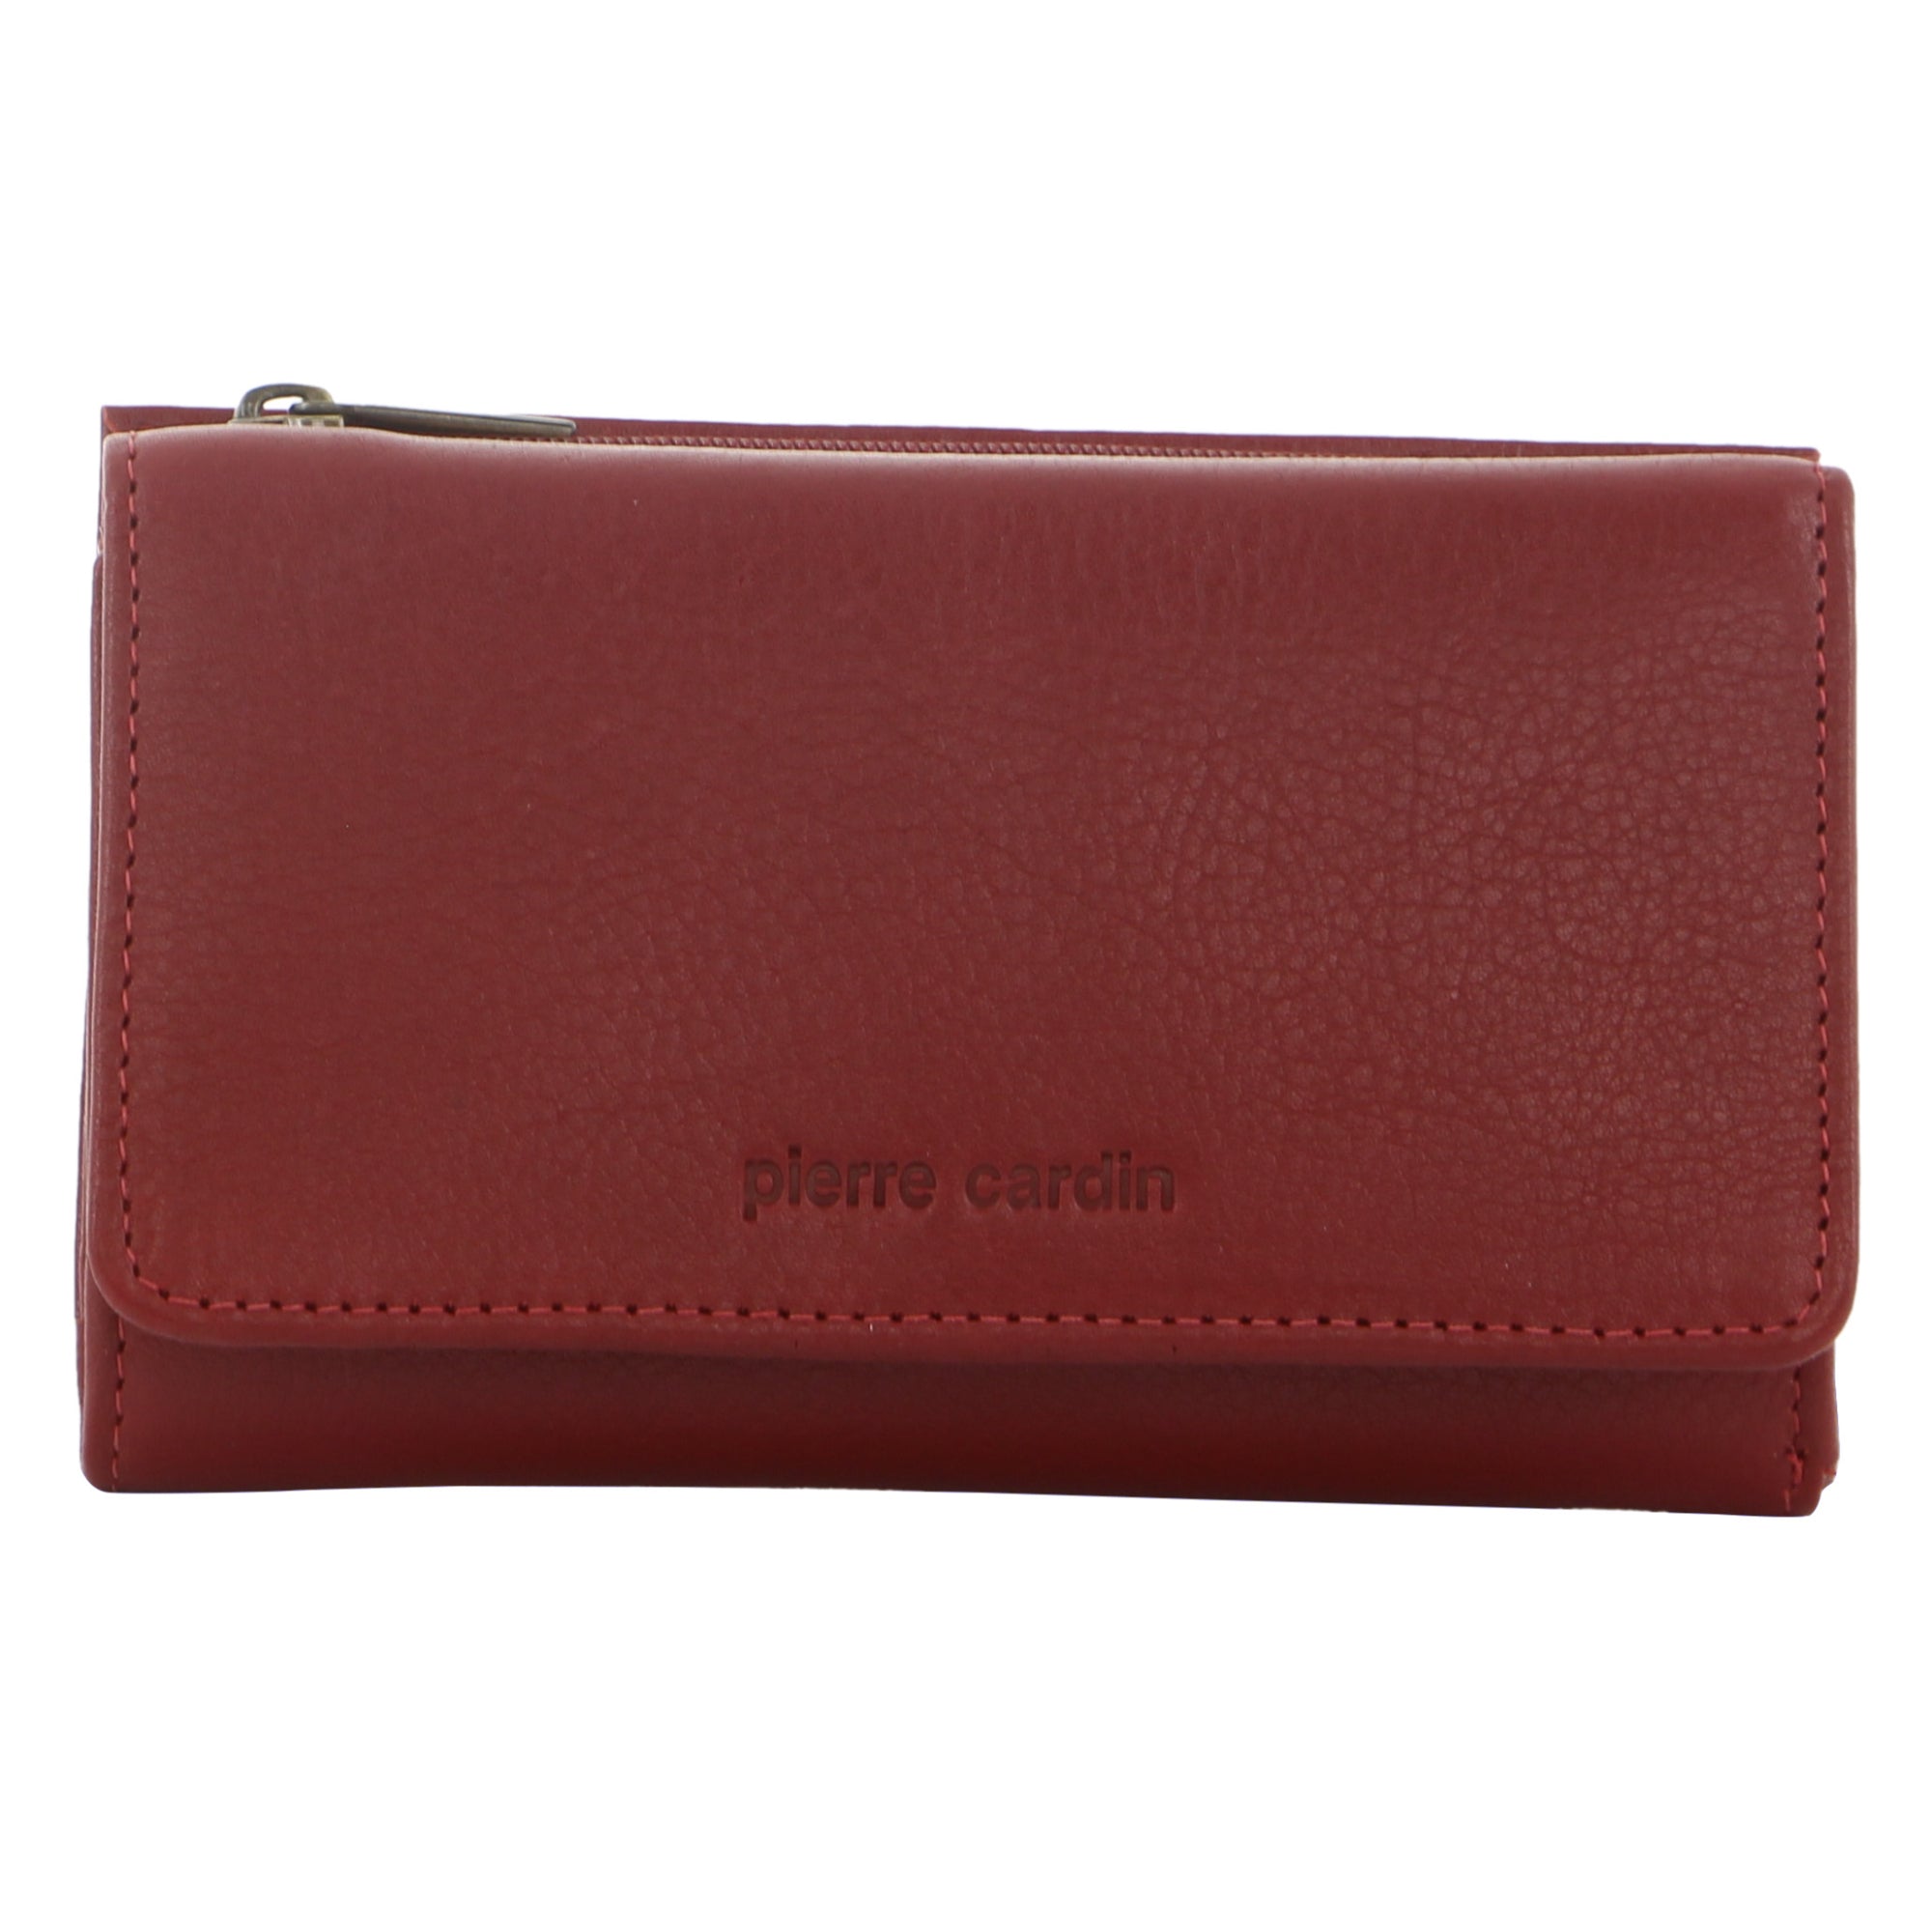 Pierre Cardin Leather Ladies Tri-Fold Wallet in Red